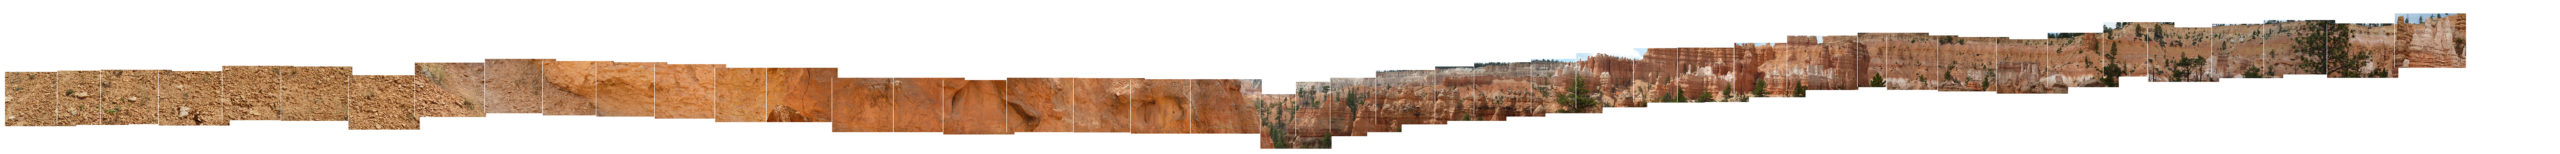 2010 Bryce Canyon small 44 prints